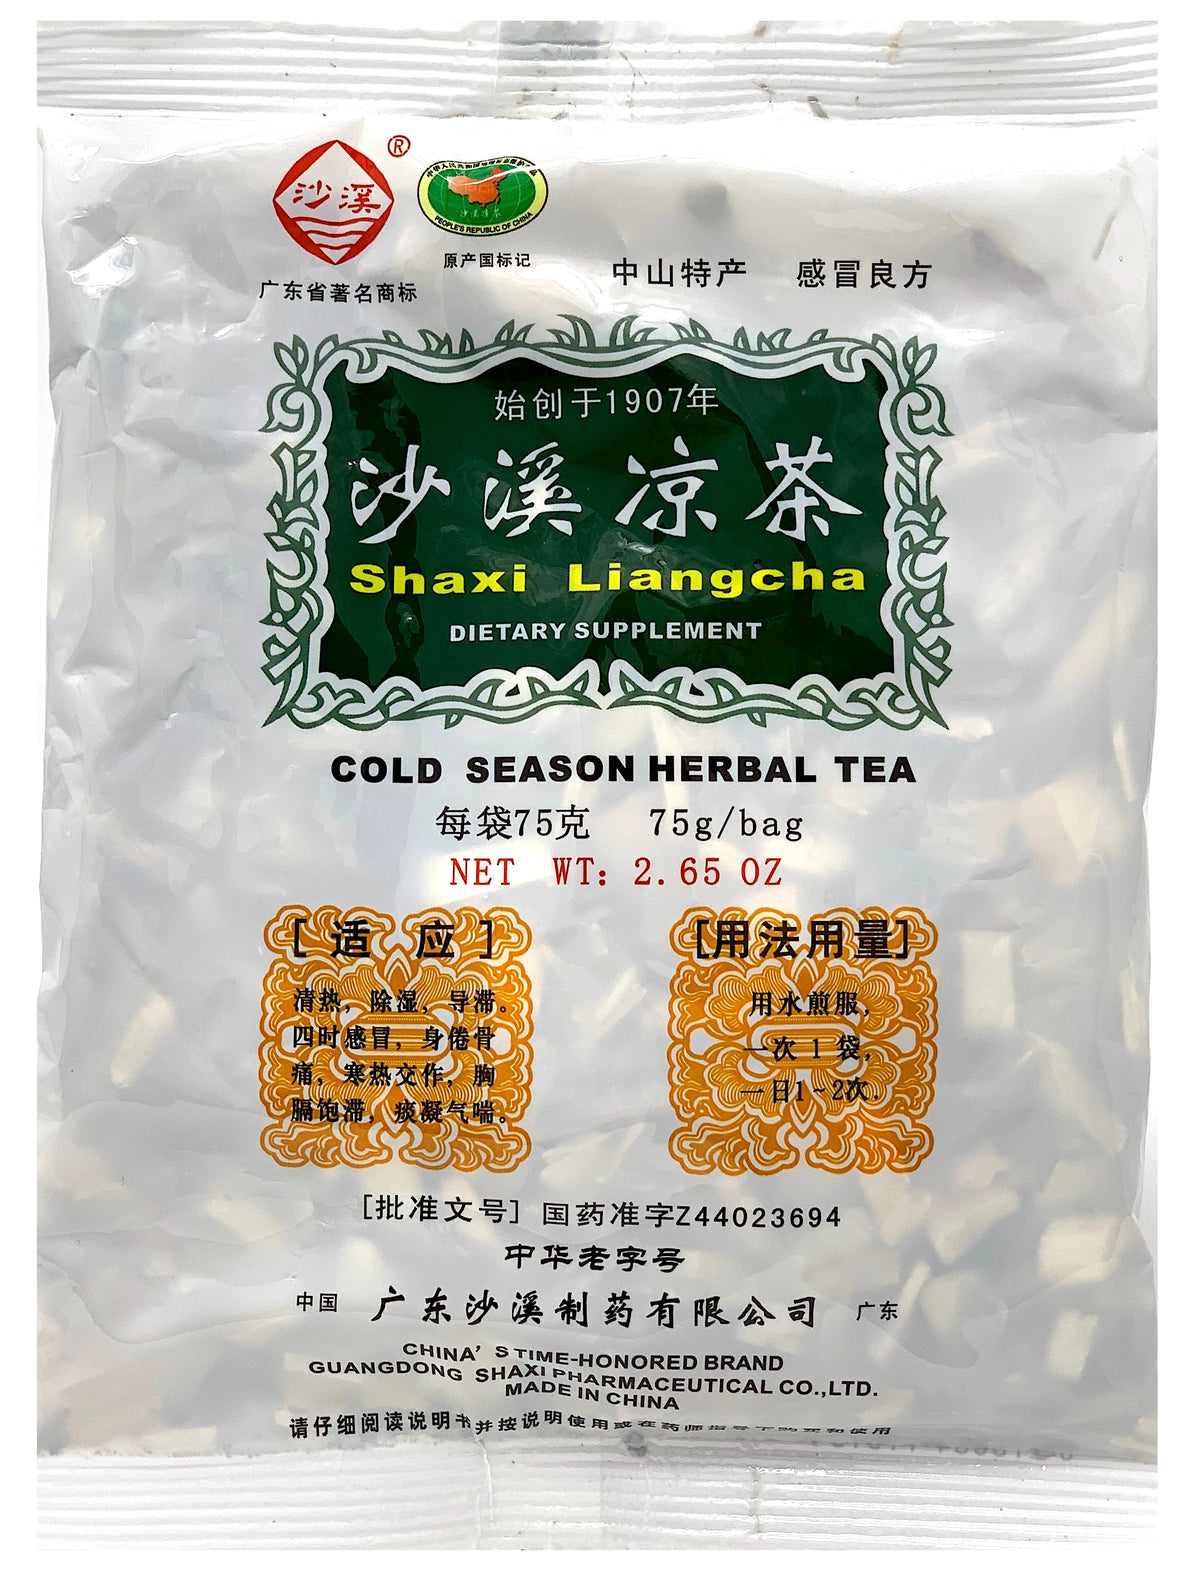 Cold Season Herbal Tea (ShaXi LiangCha Herbal Tea)